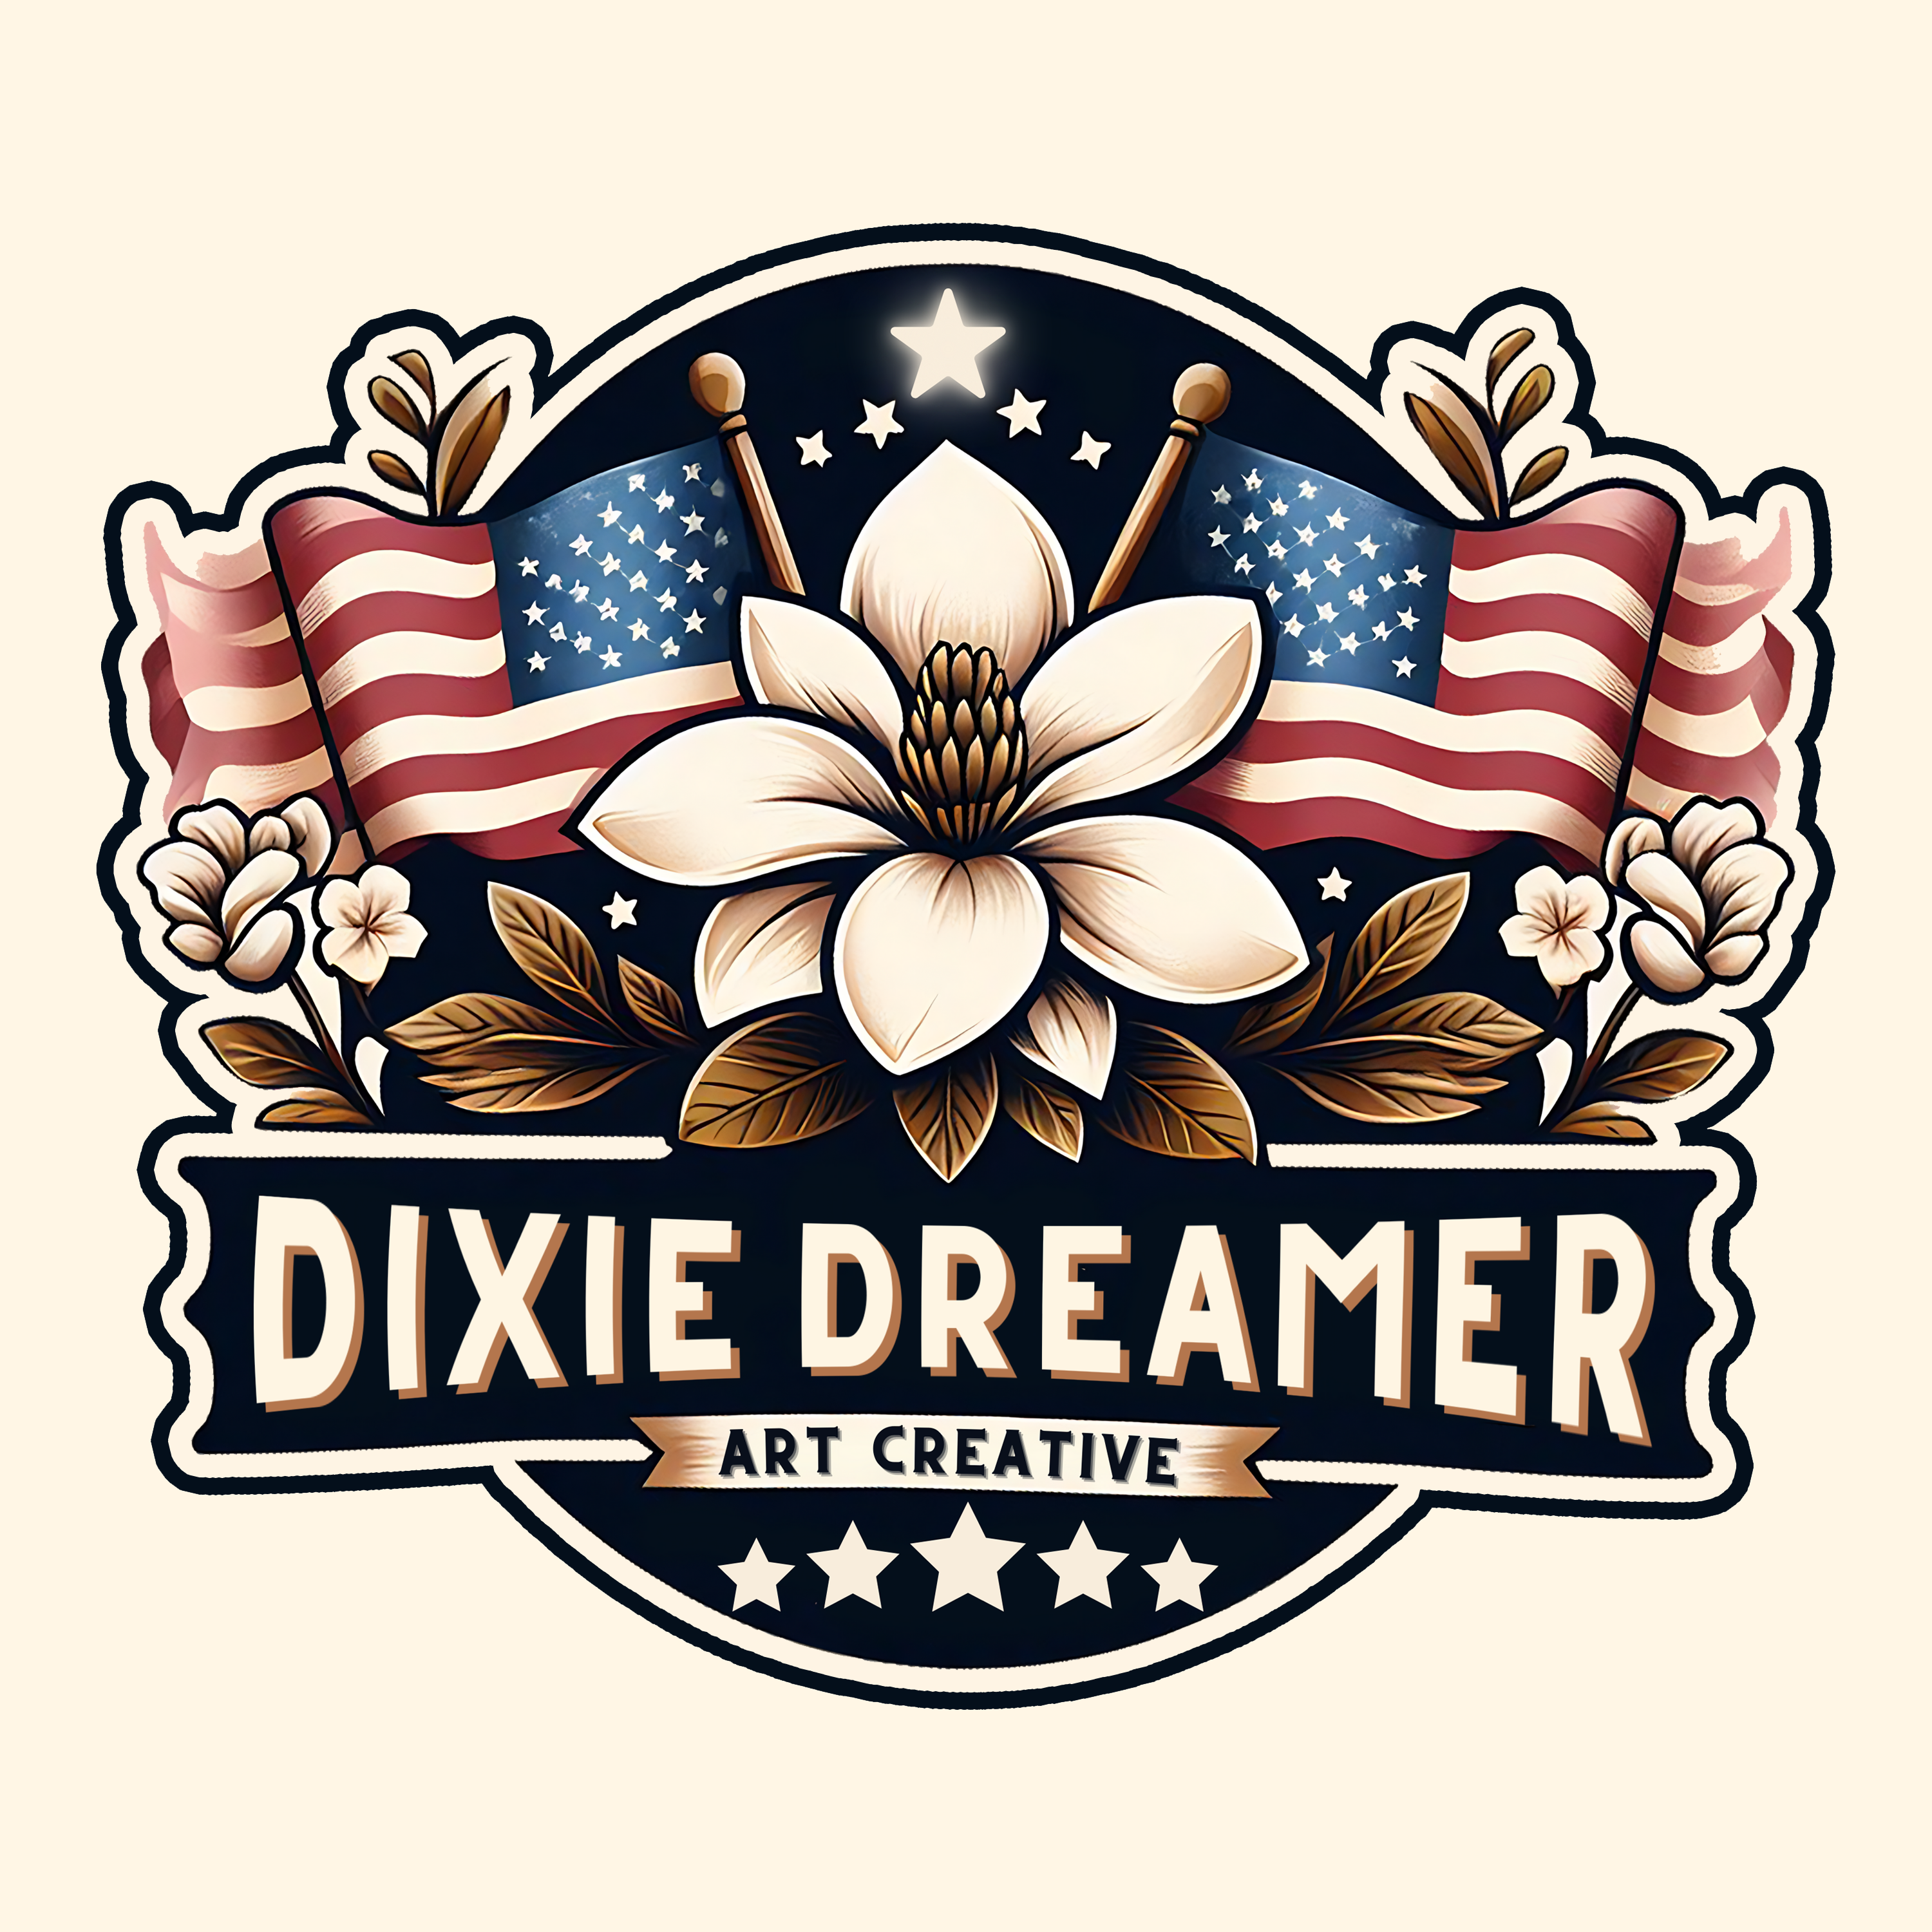 DixieDreamer.art - Dixie Dreamer Co. Company Website